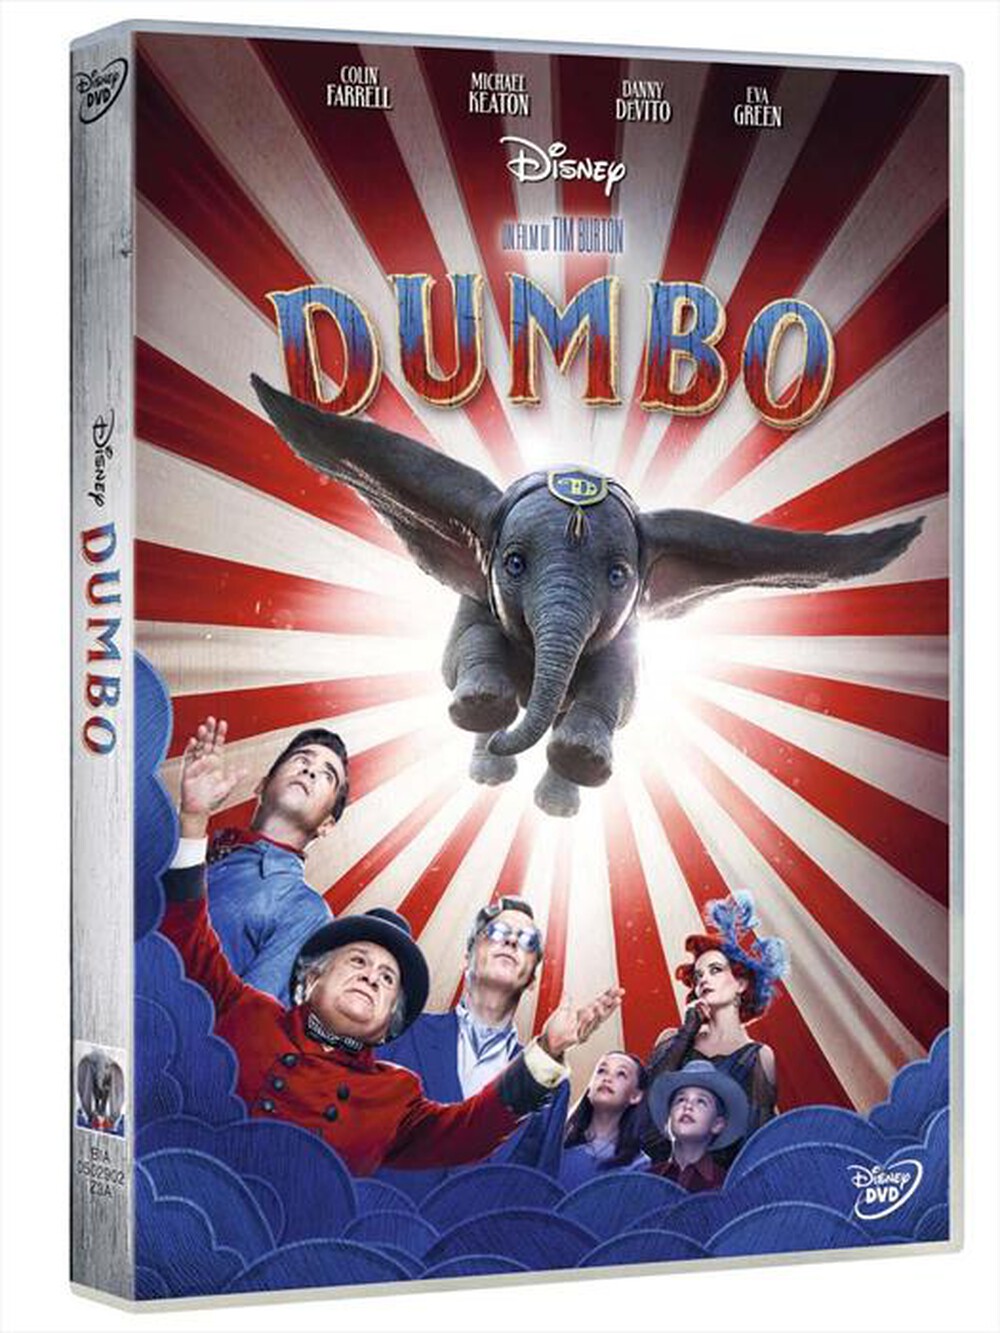 "WALT DISNEY - Dumbo (Live Action)"